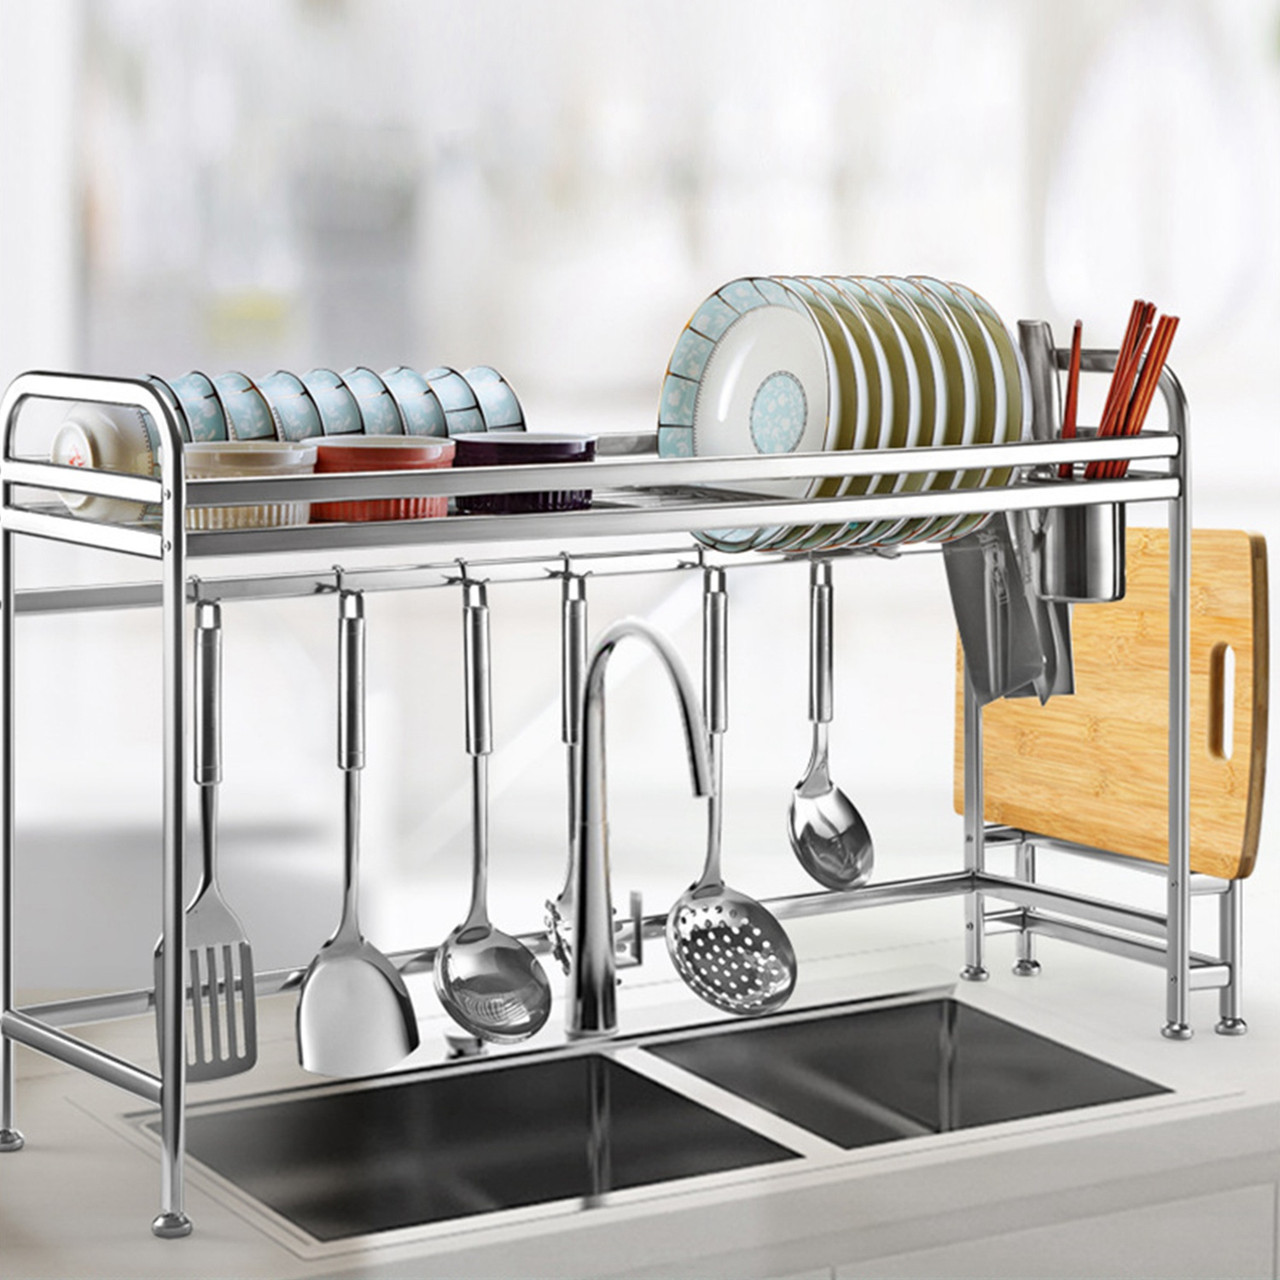 iMounTEK® Space Saving Over-the-Sink Dish Drying Rack and Organizer product image